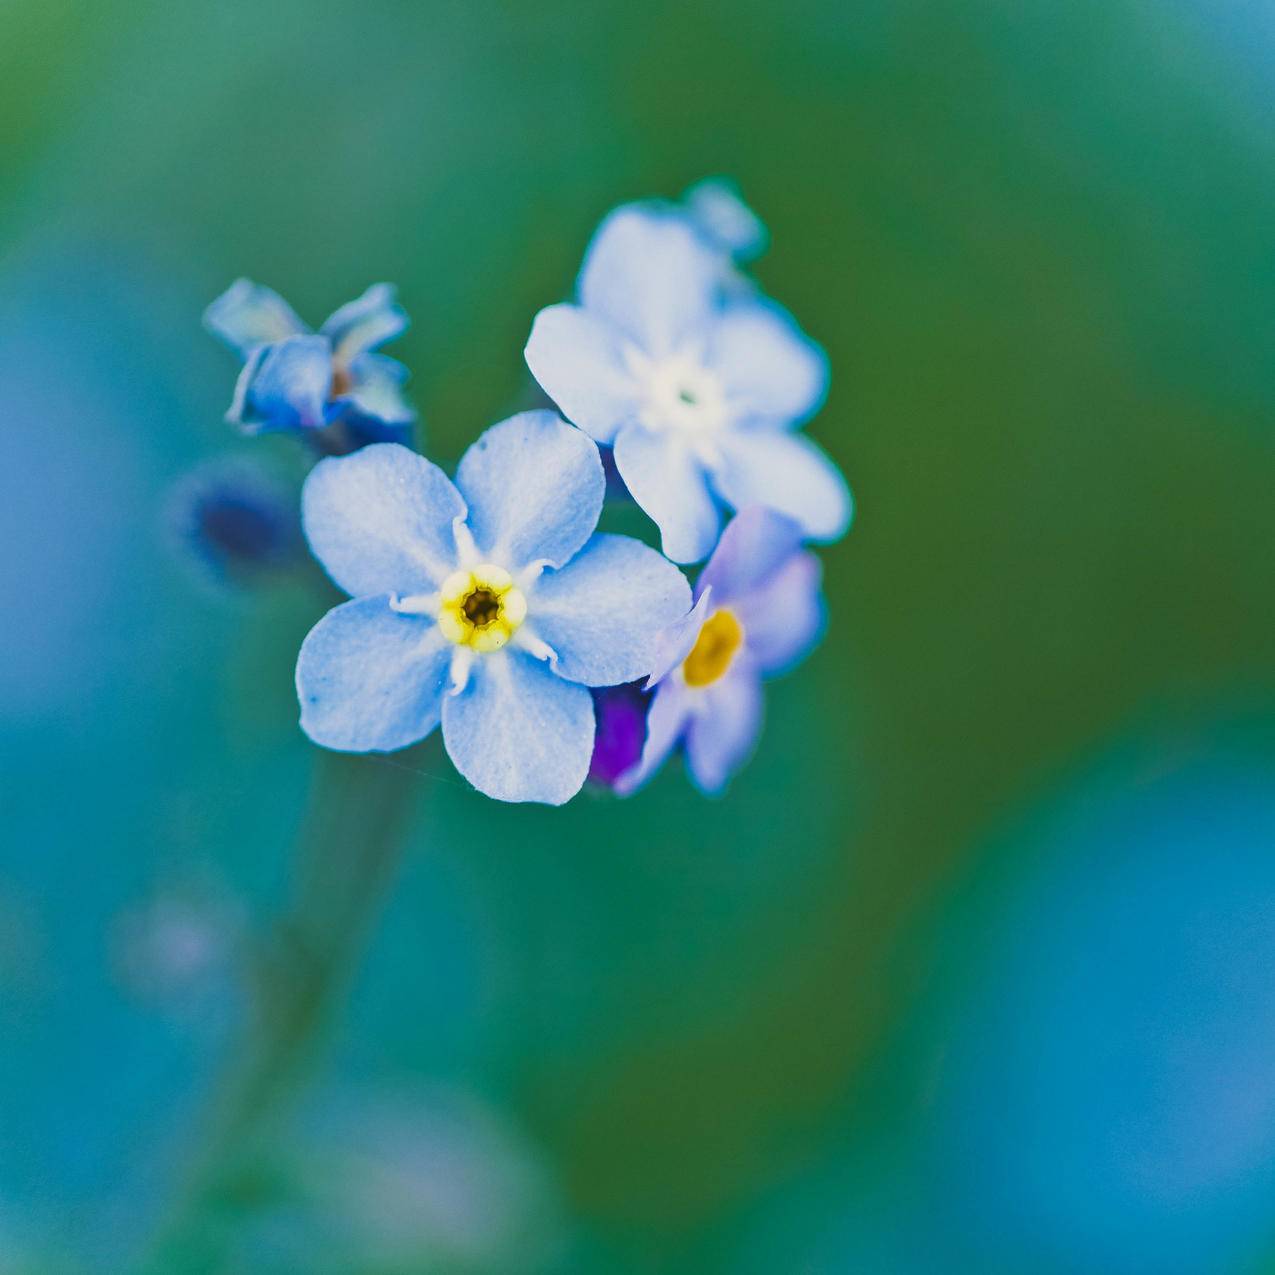 cc0可商用的自然,花卉,蓝色,花瓣图片